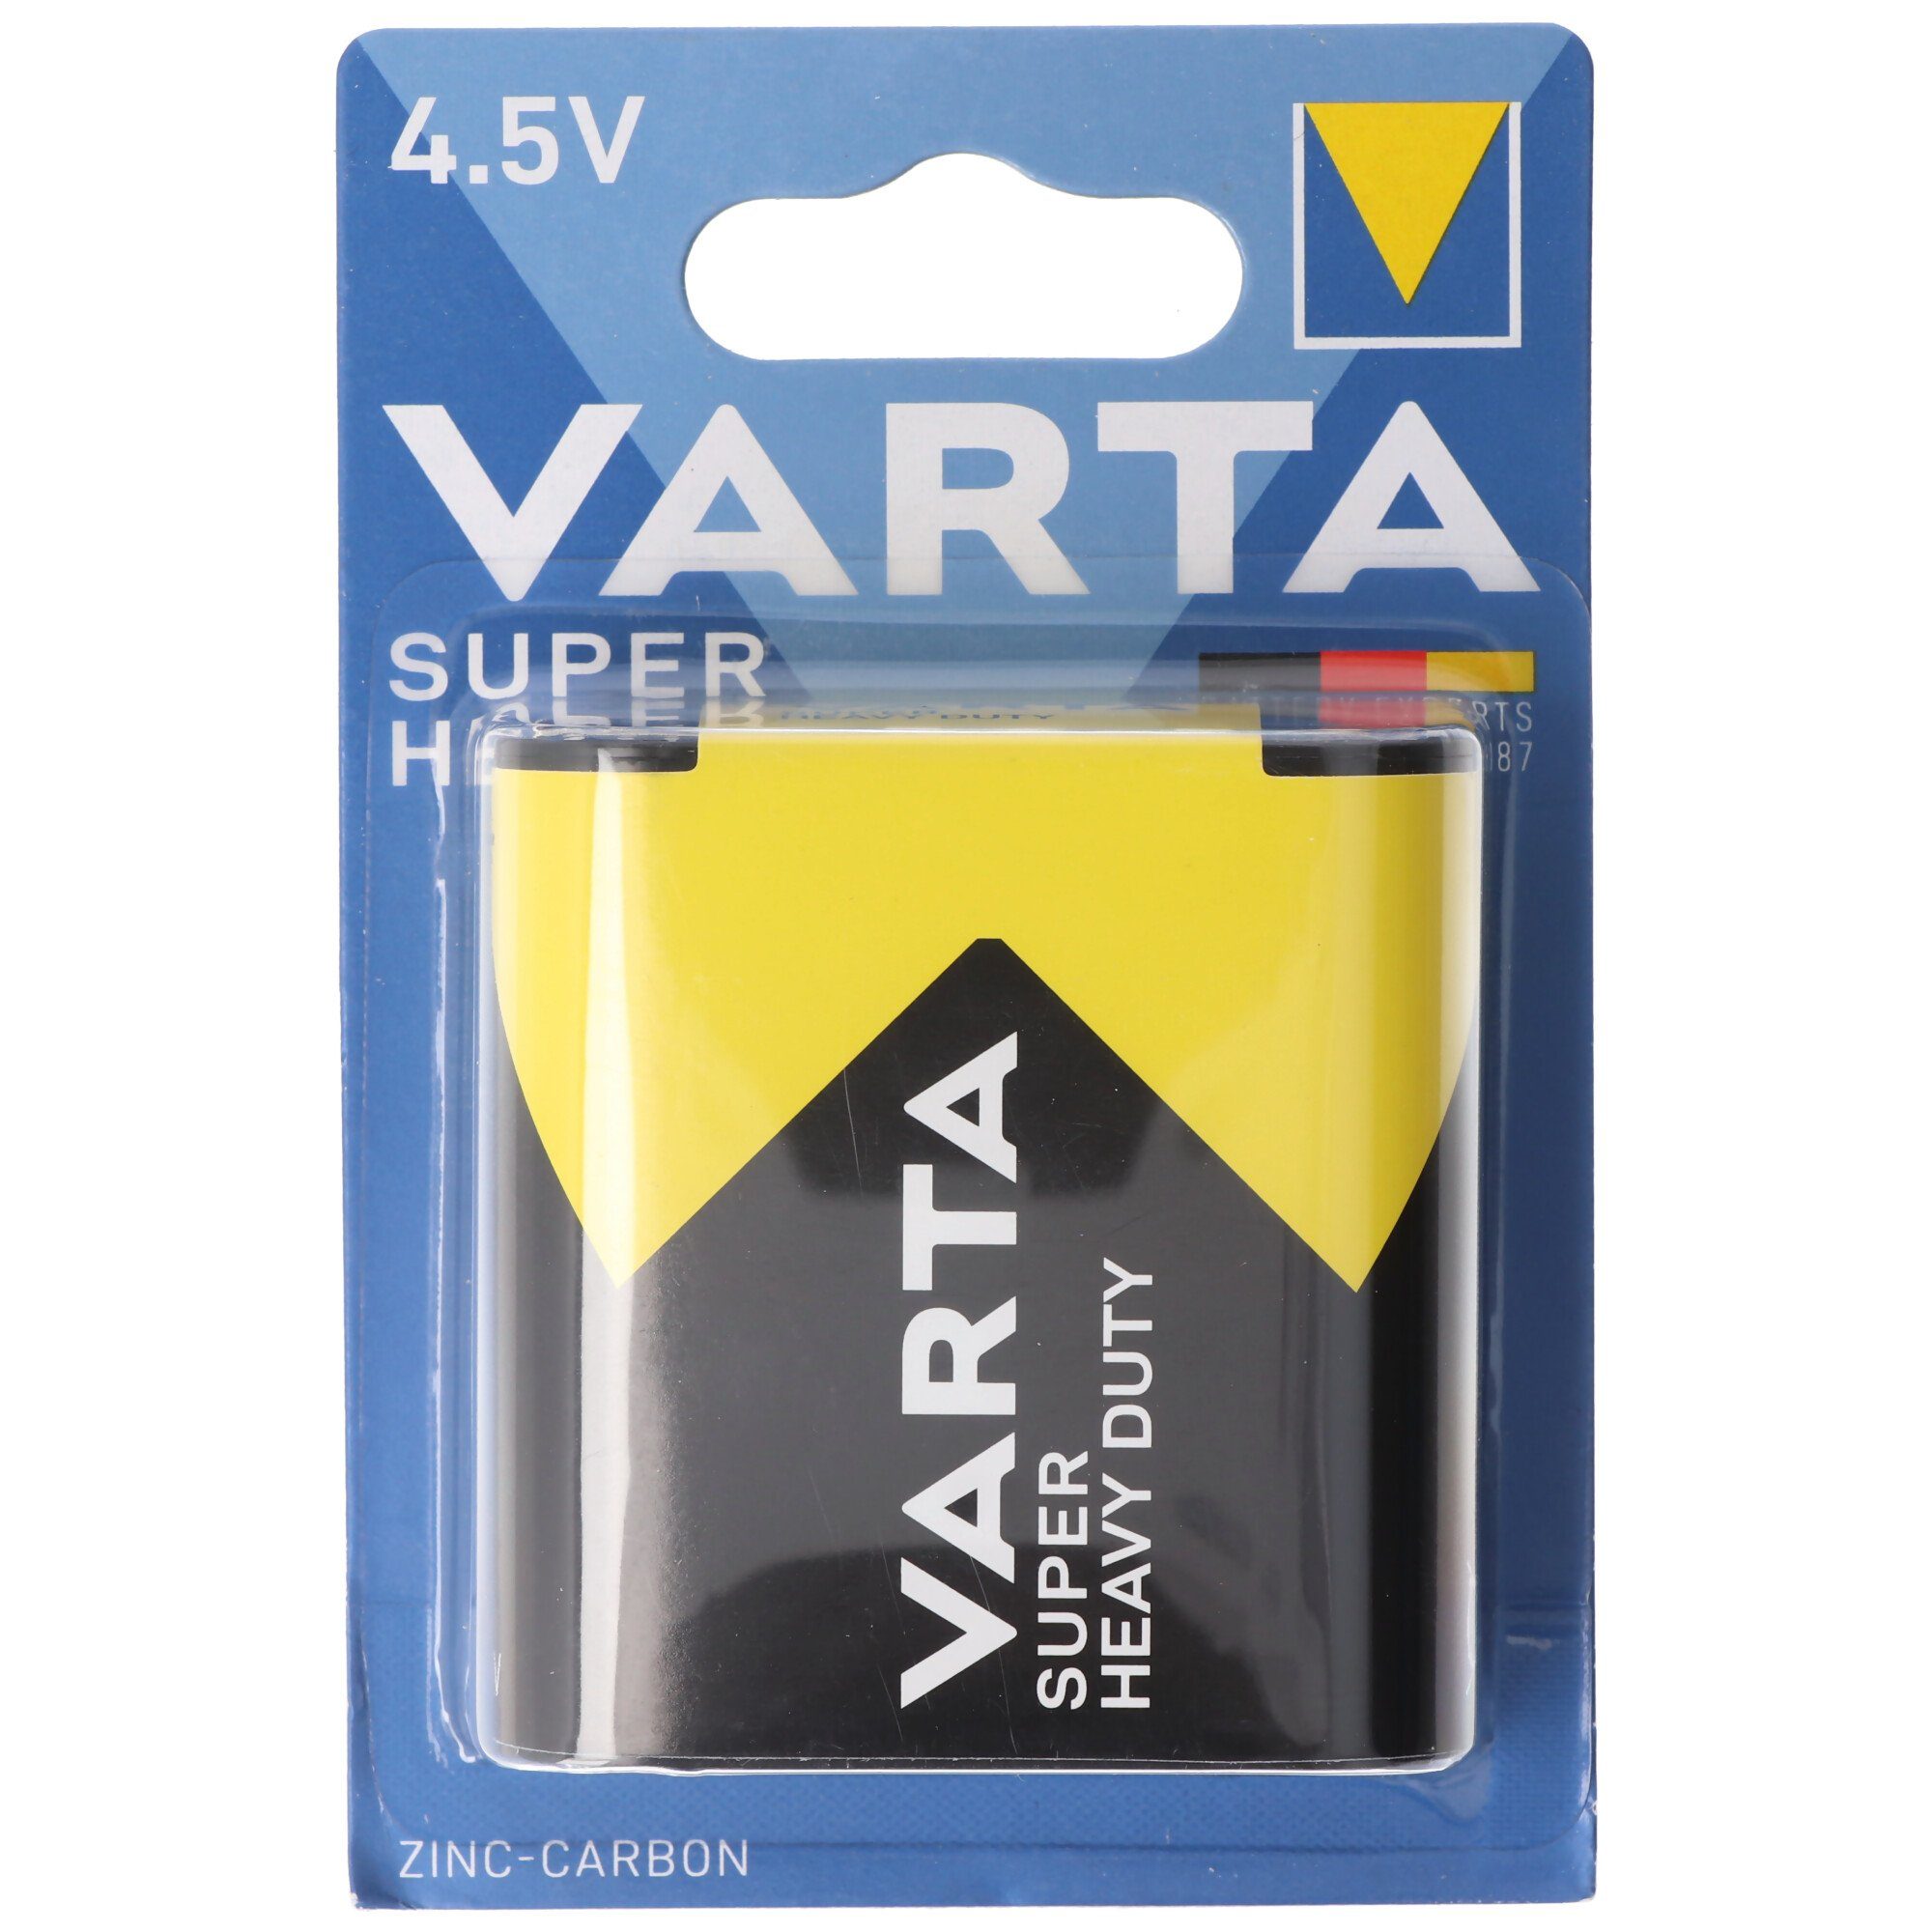 3R12, V) Varta Volt Normal (4,5 VARTA Flachbatterie 3R12P 3012 4,5 Batterie, Superlife